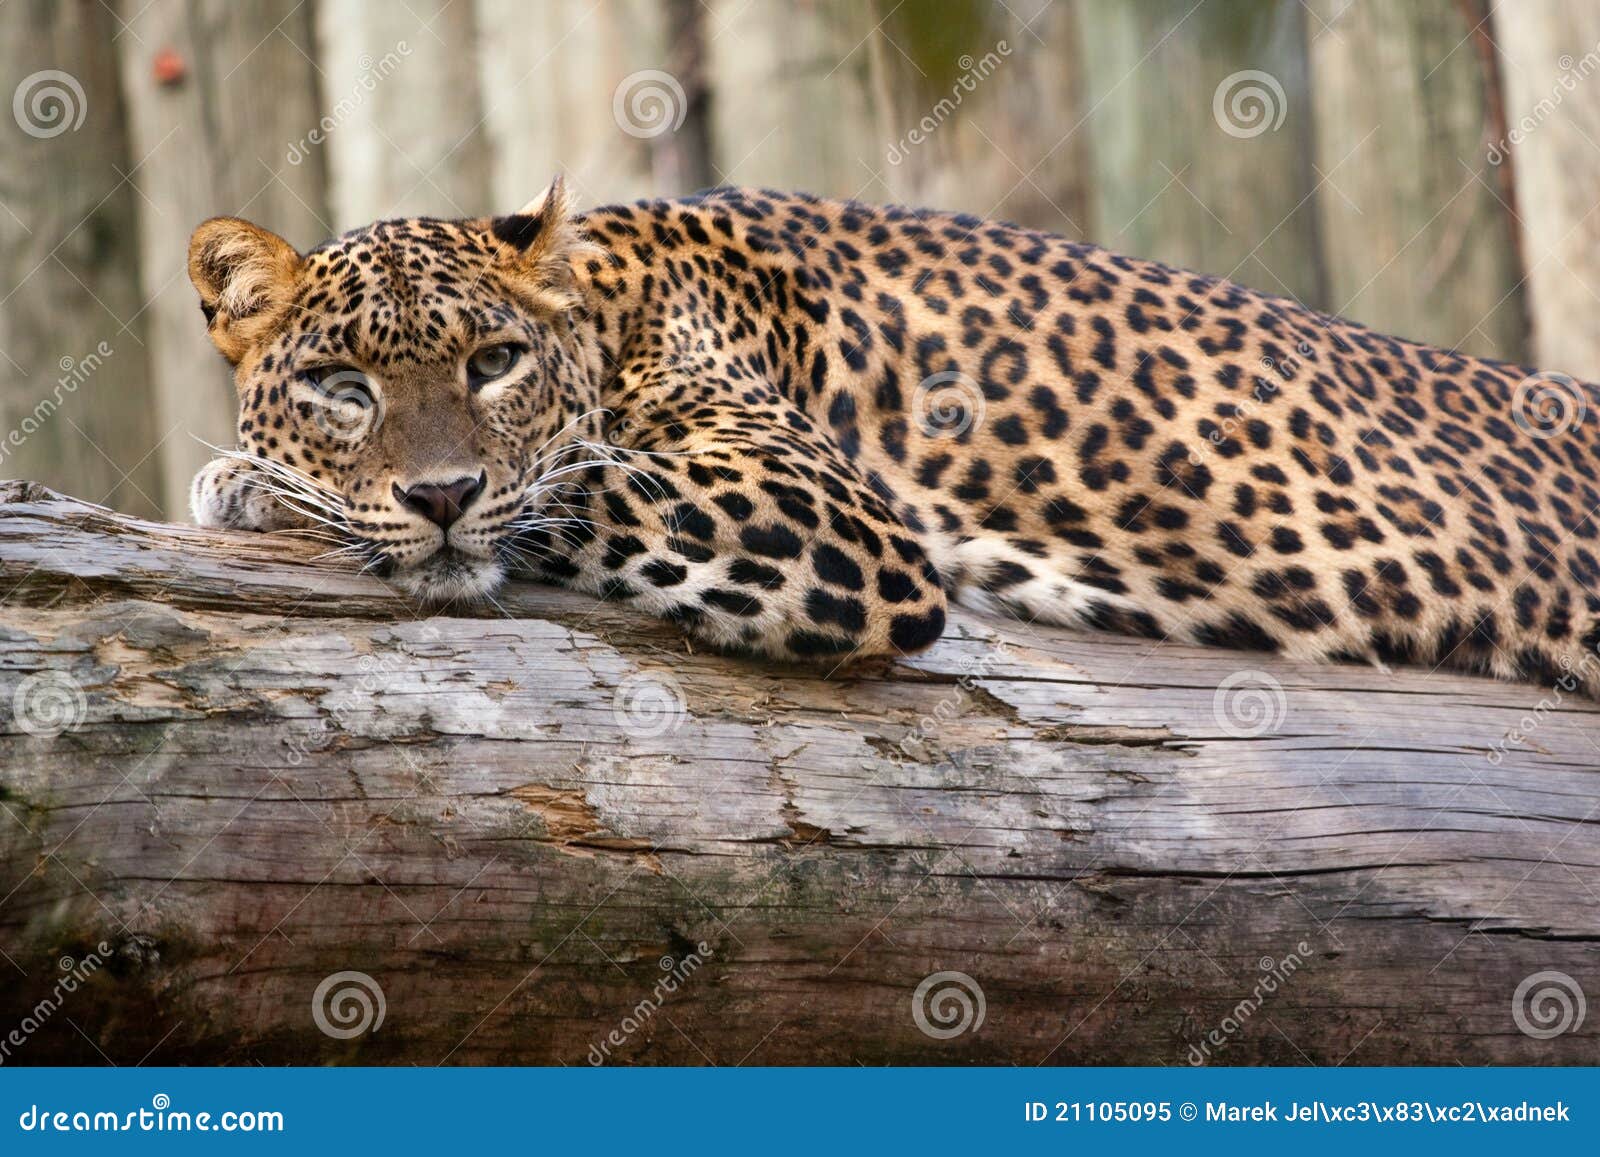 sri lankan leopard